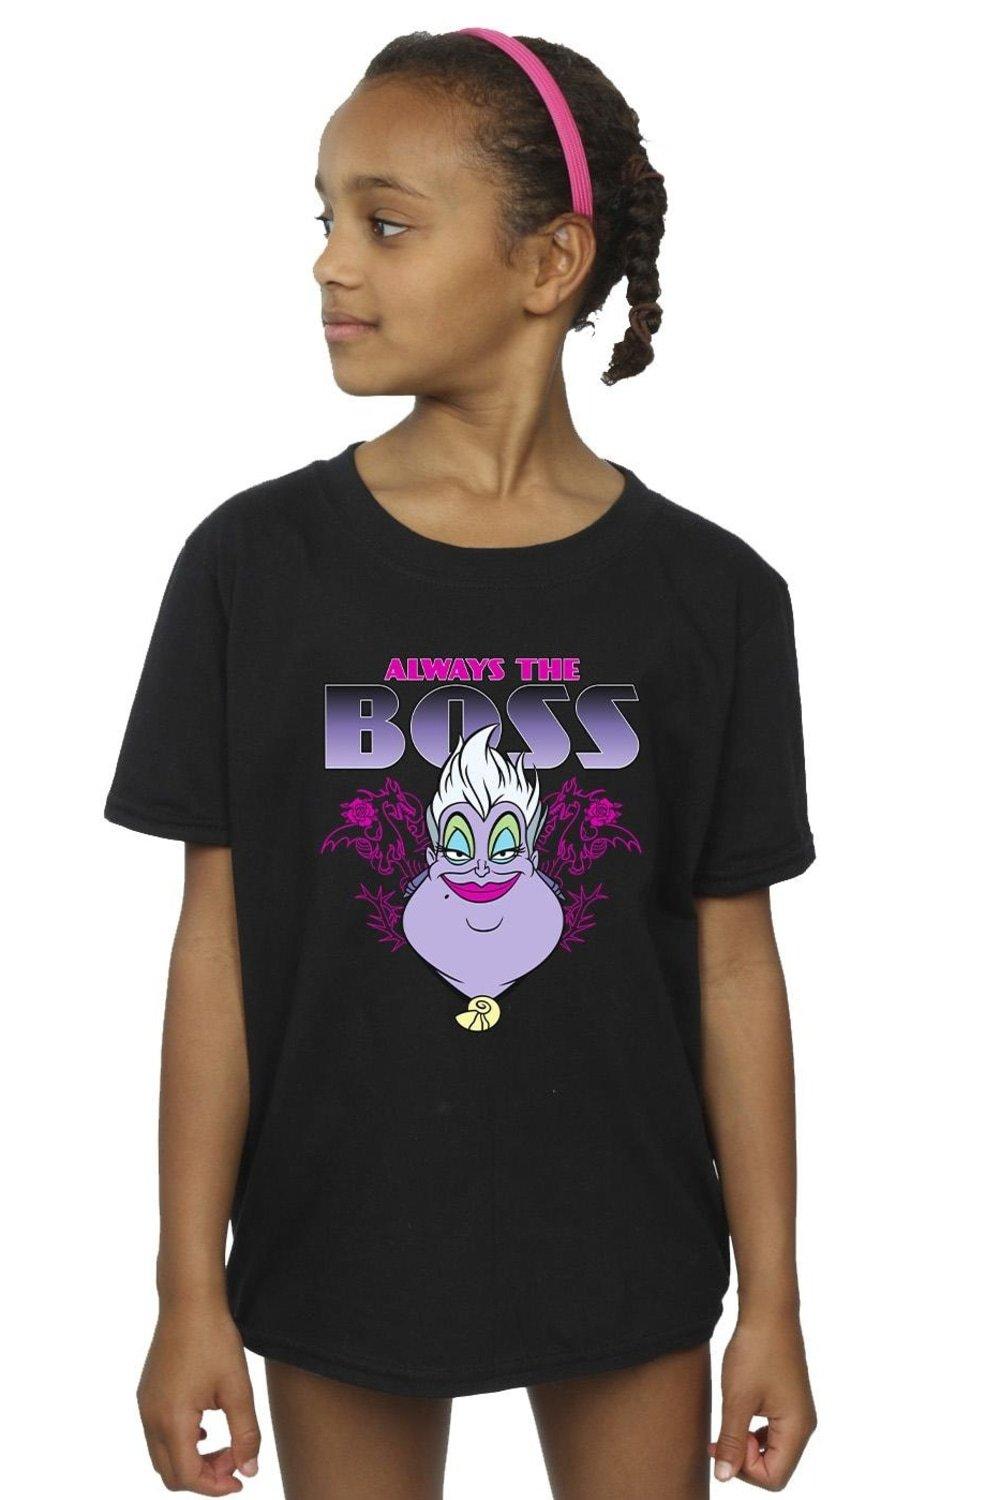 The Little Mermaid Ursula Mum Is The Boss Cotton T-Shirt